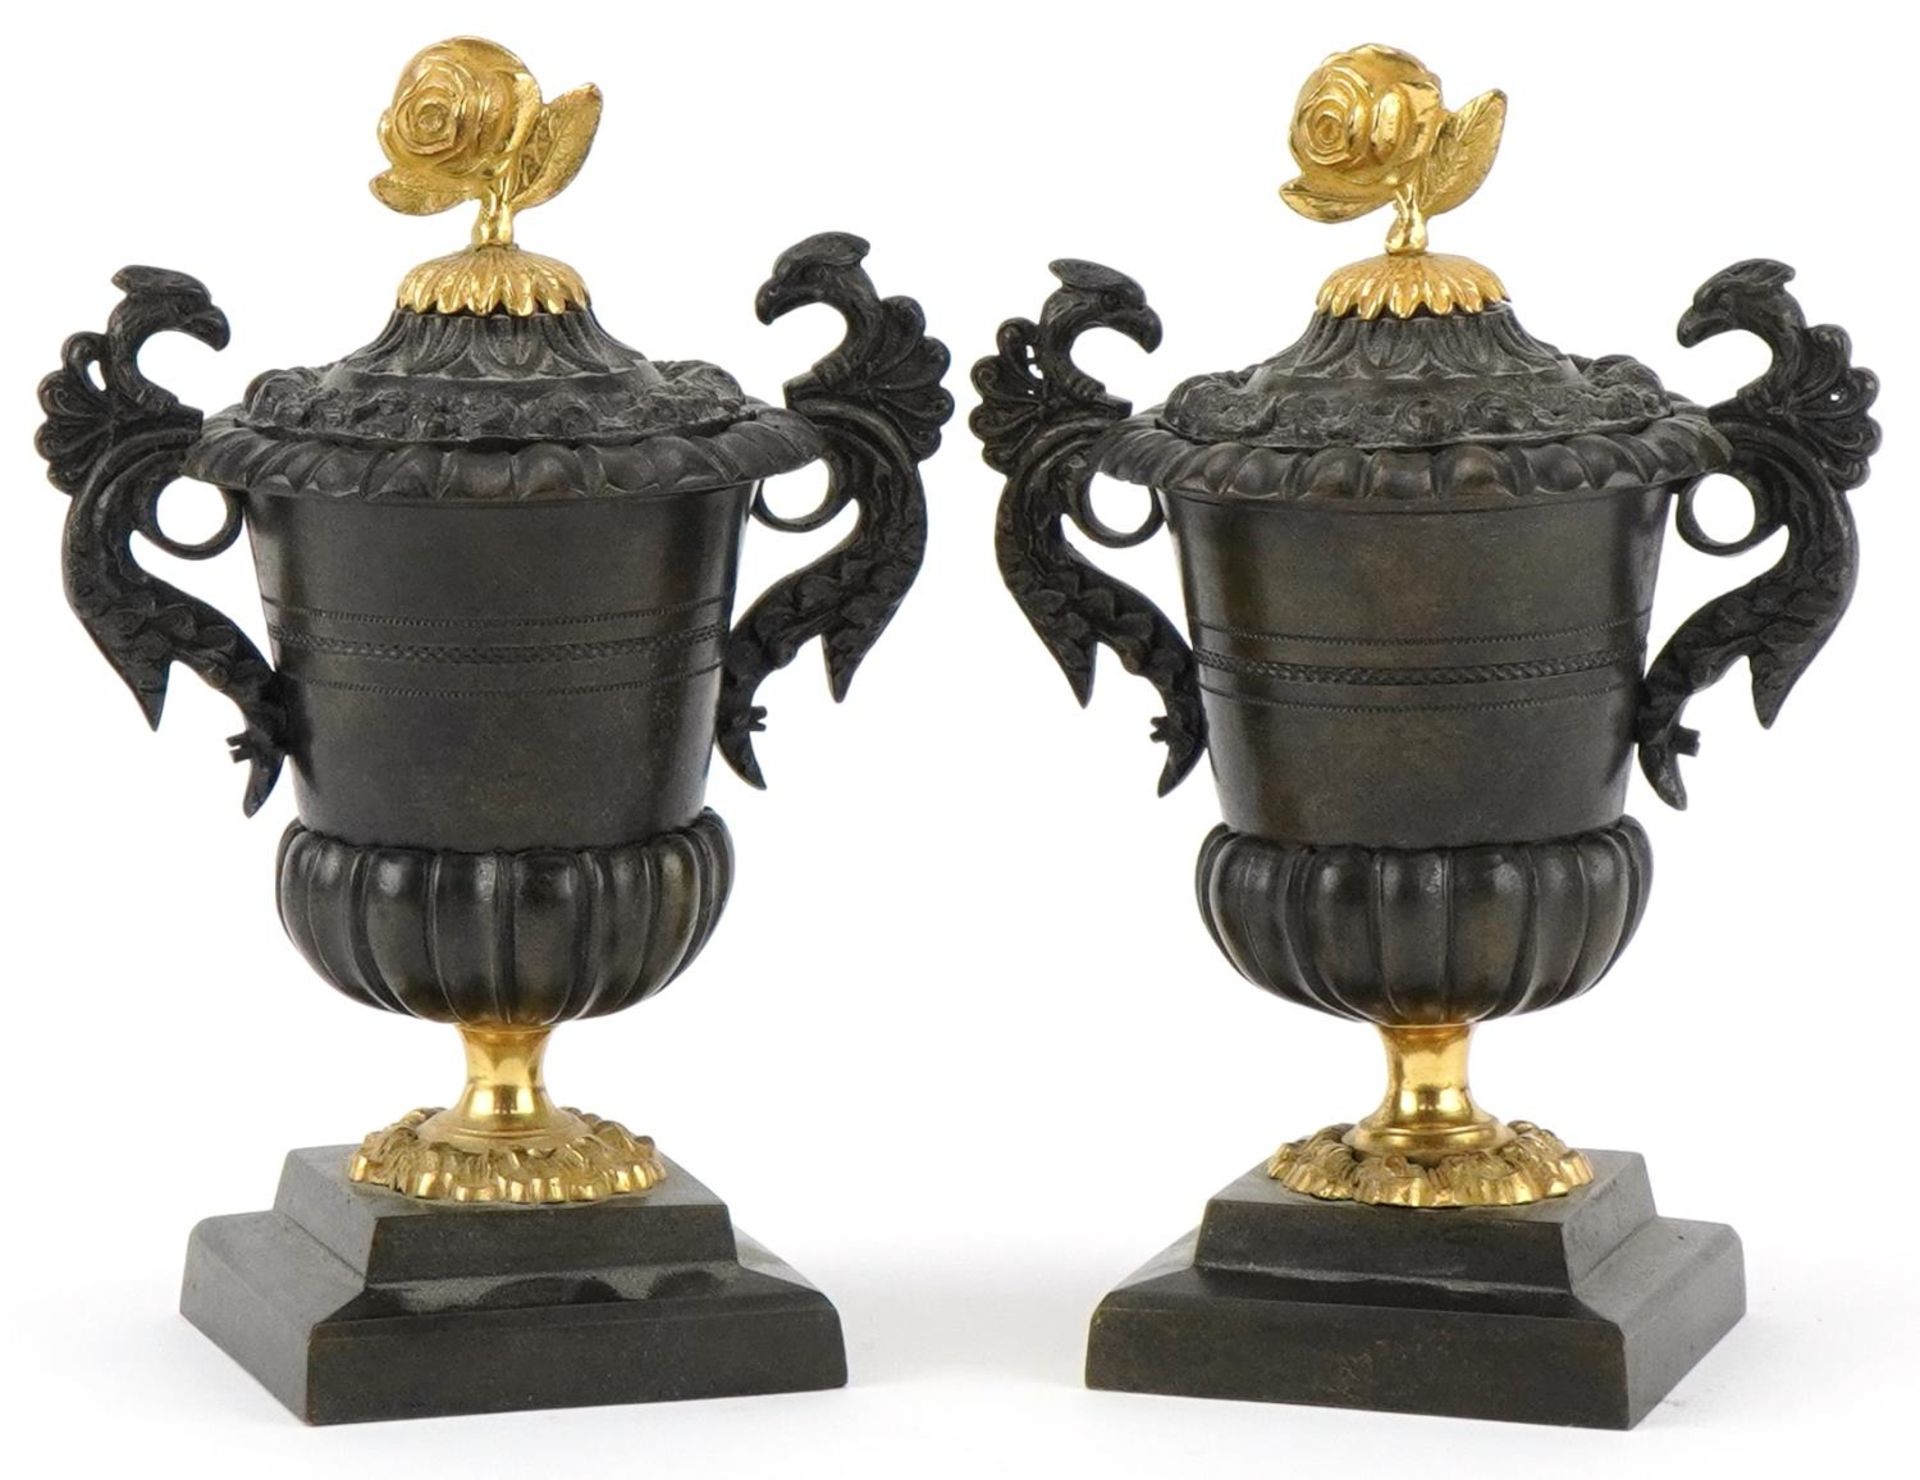 Pair of Victorian Neo-Classical lidded bronze urns with bird design handles and ormolu rose design